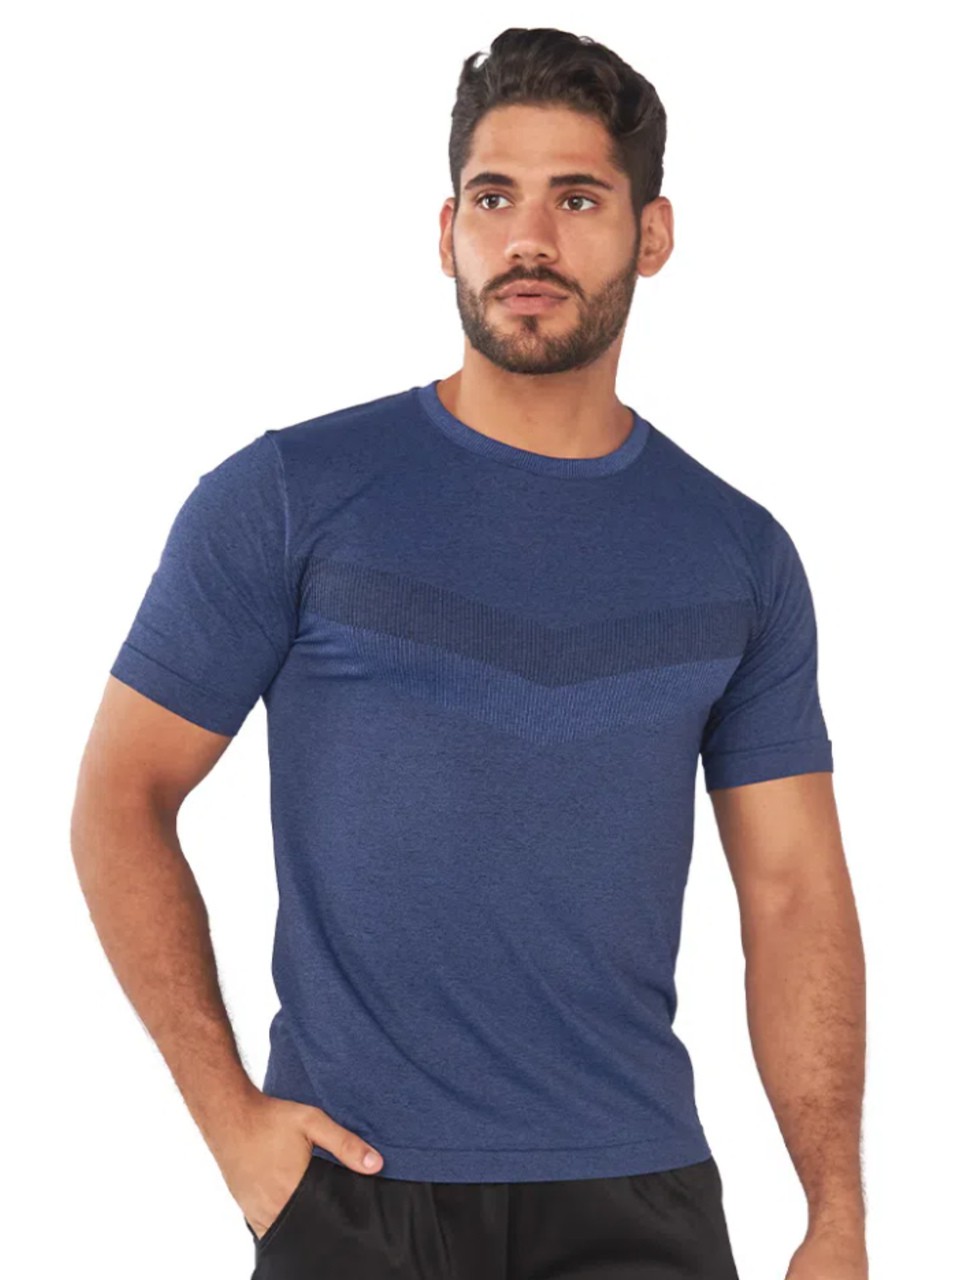 Camiseta sem costura Dry Fit masculina